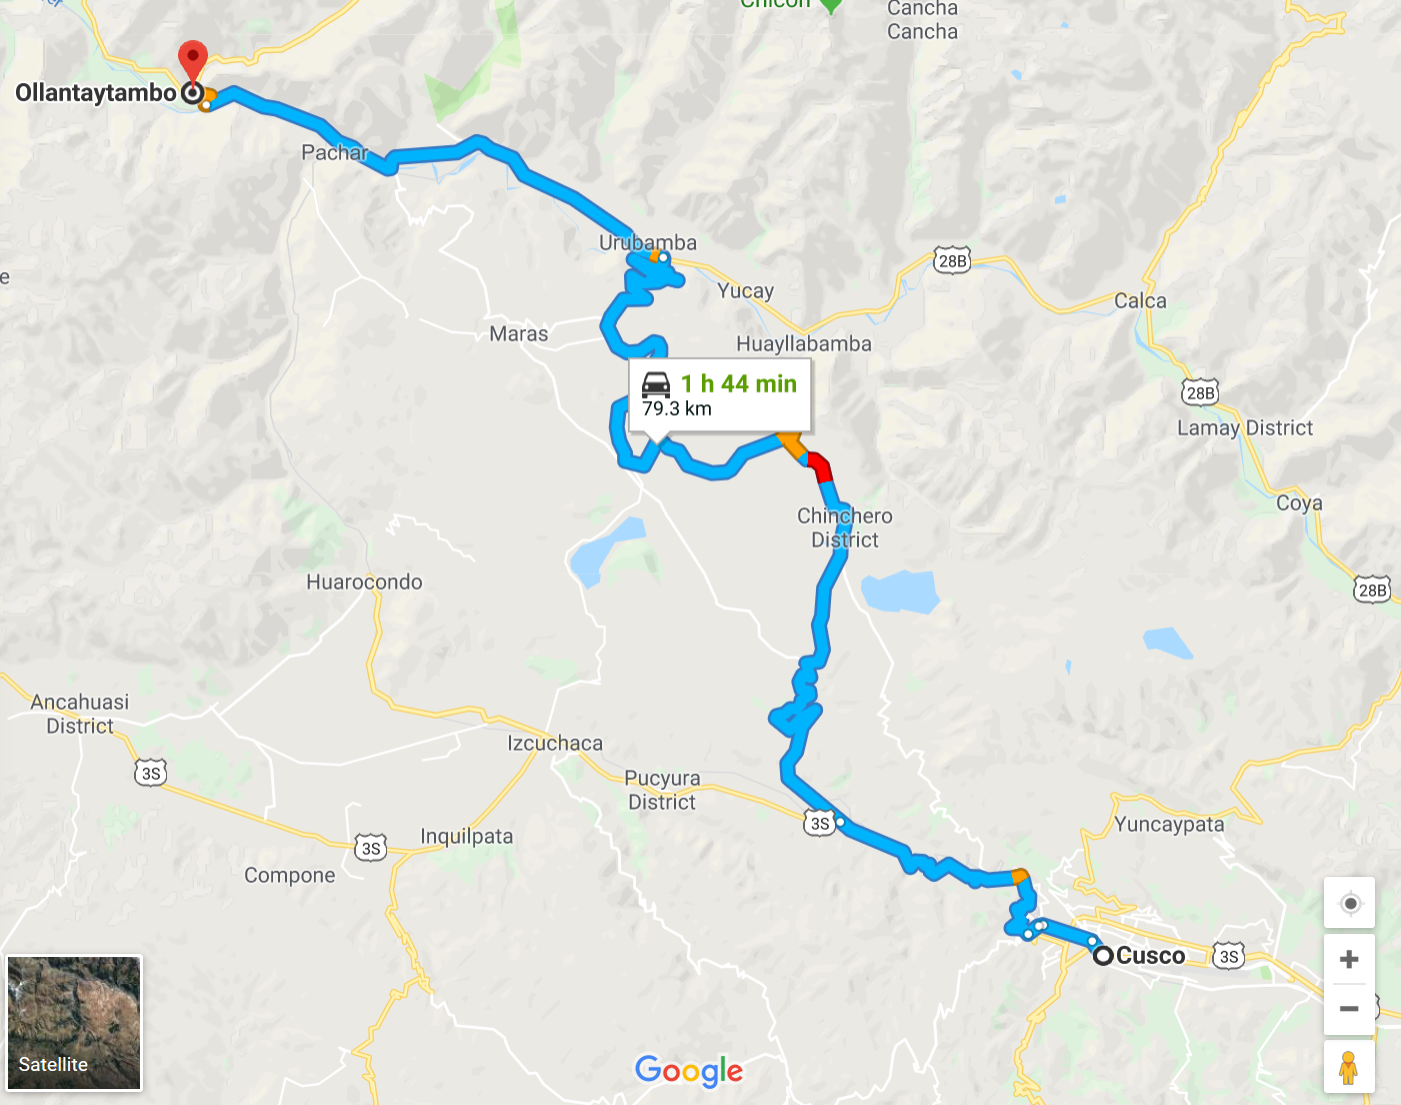 From Cusco to Ollantaytambo